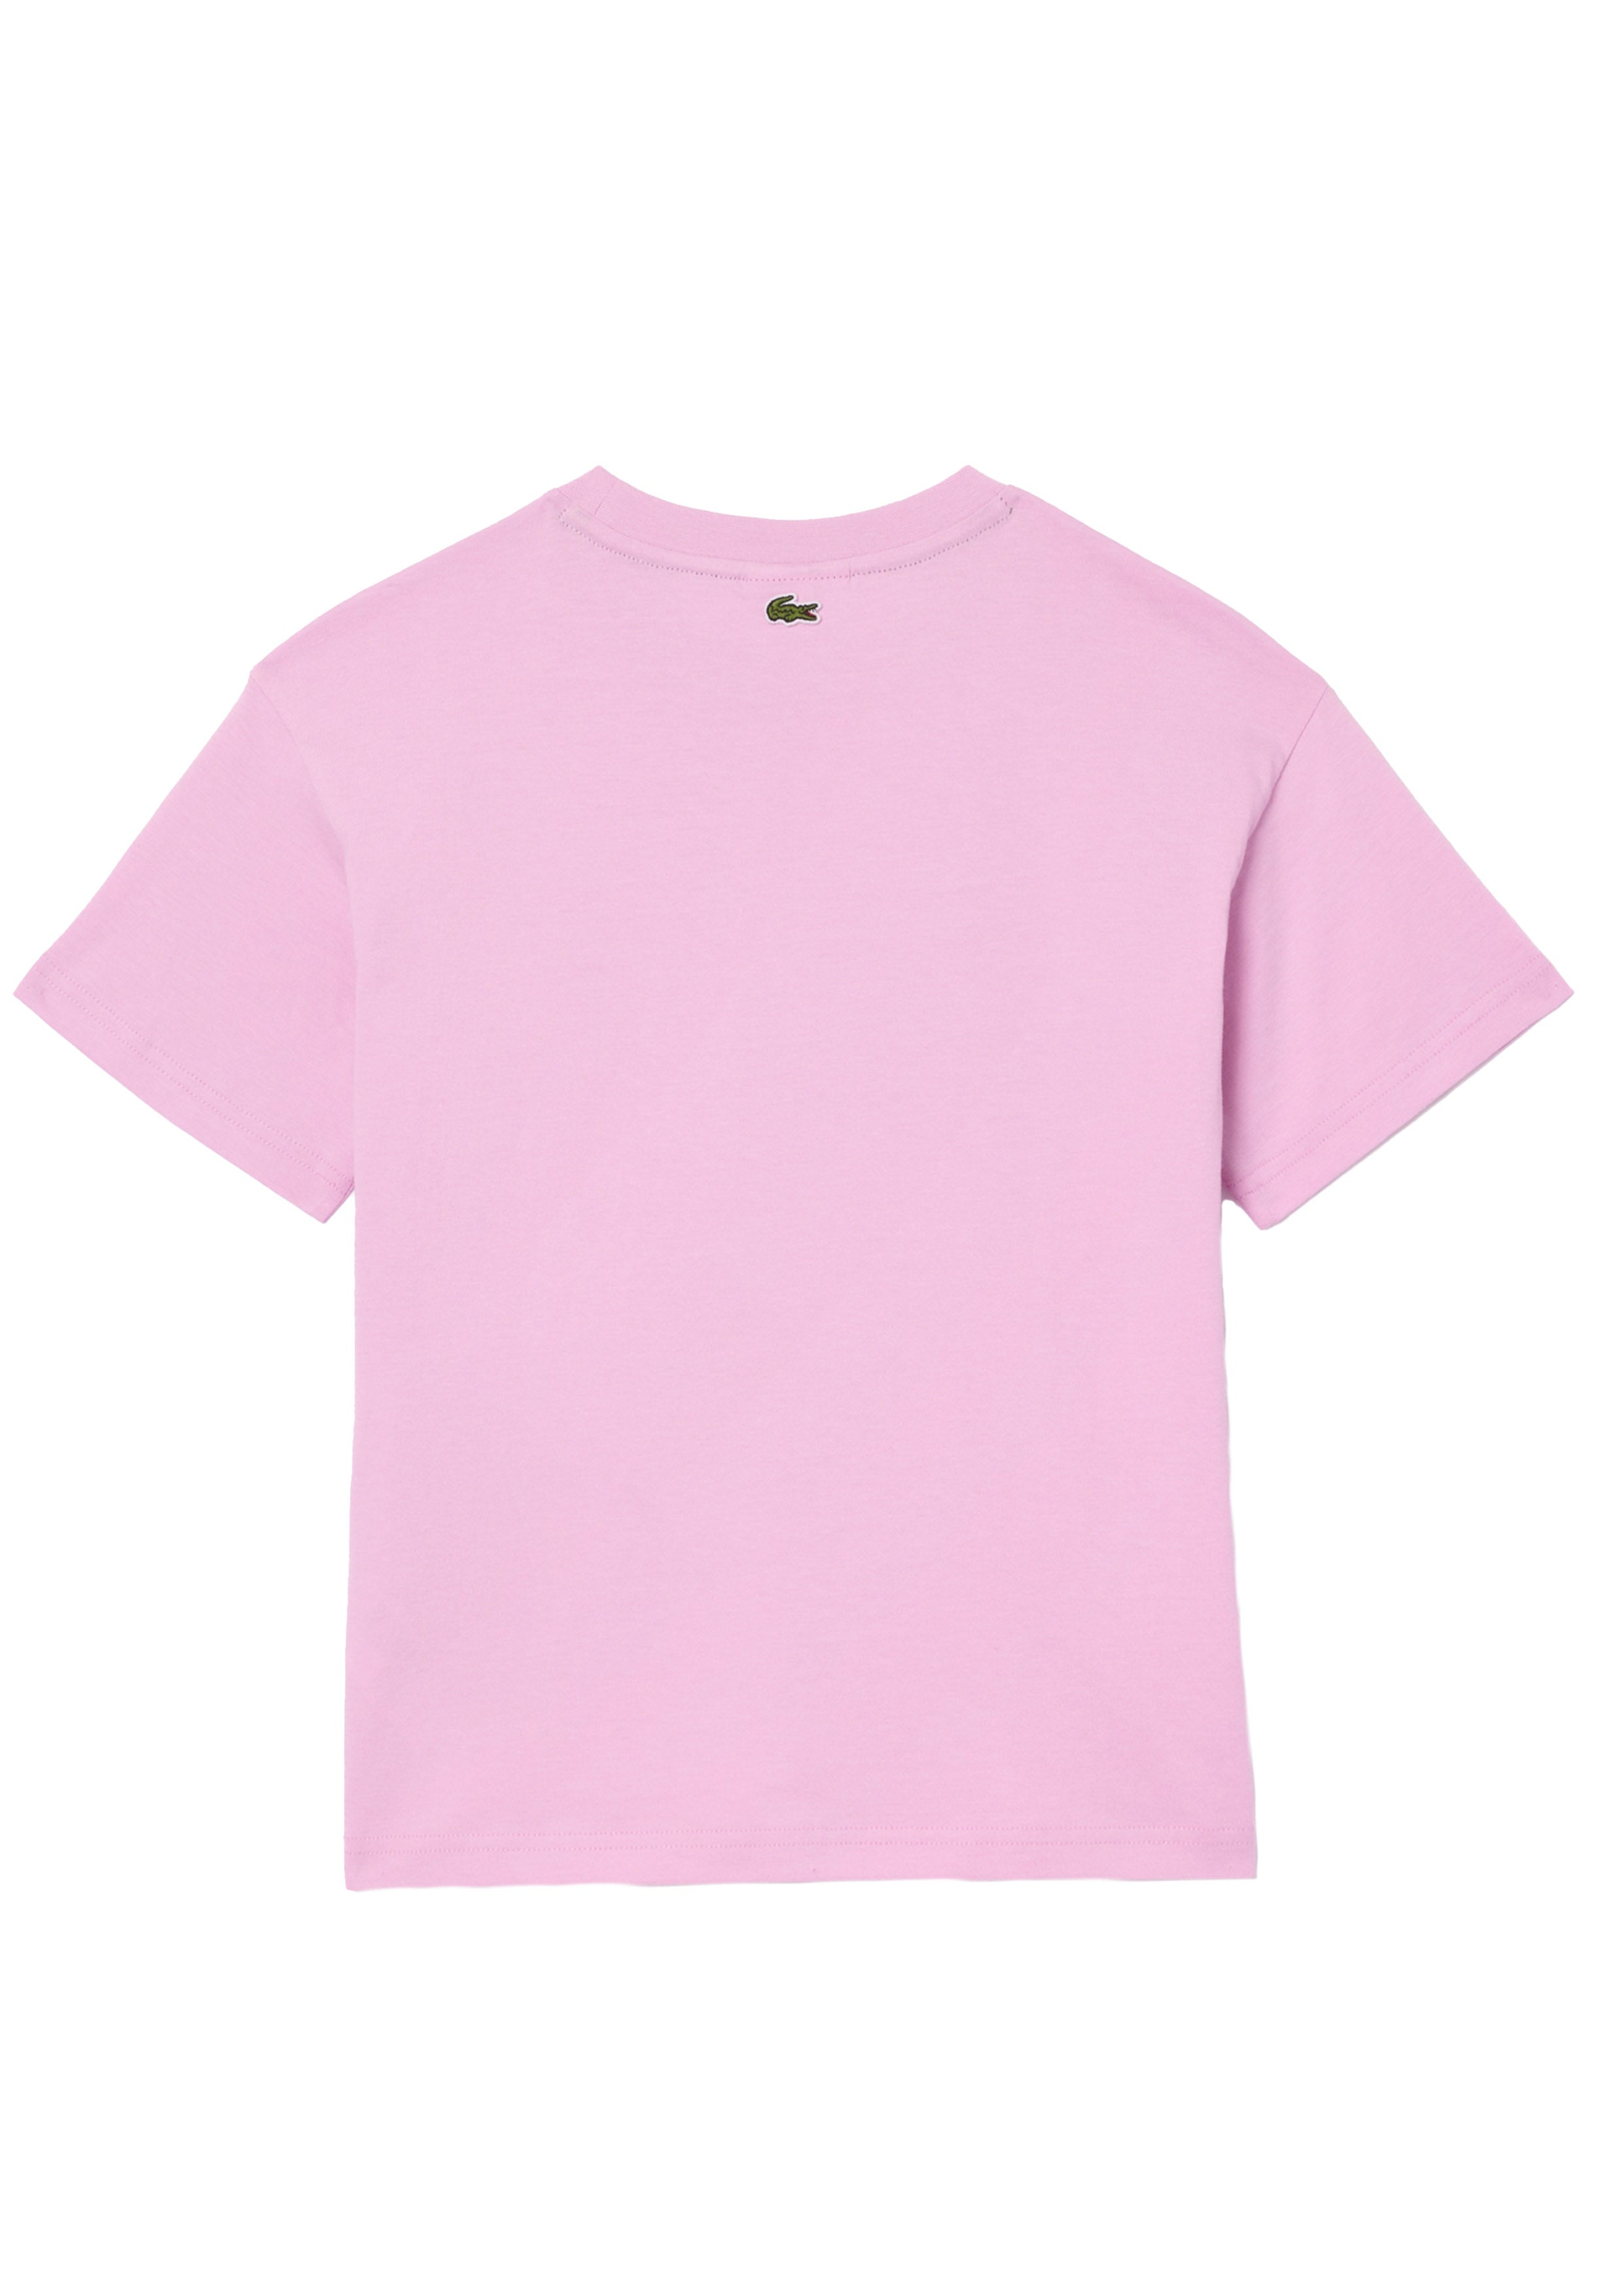 T-shirt rosa big logo stampa